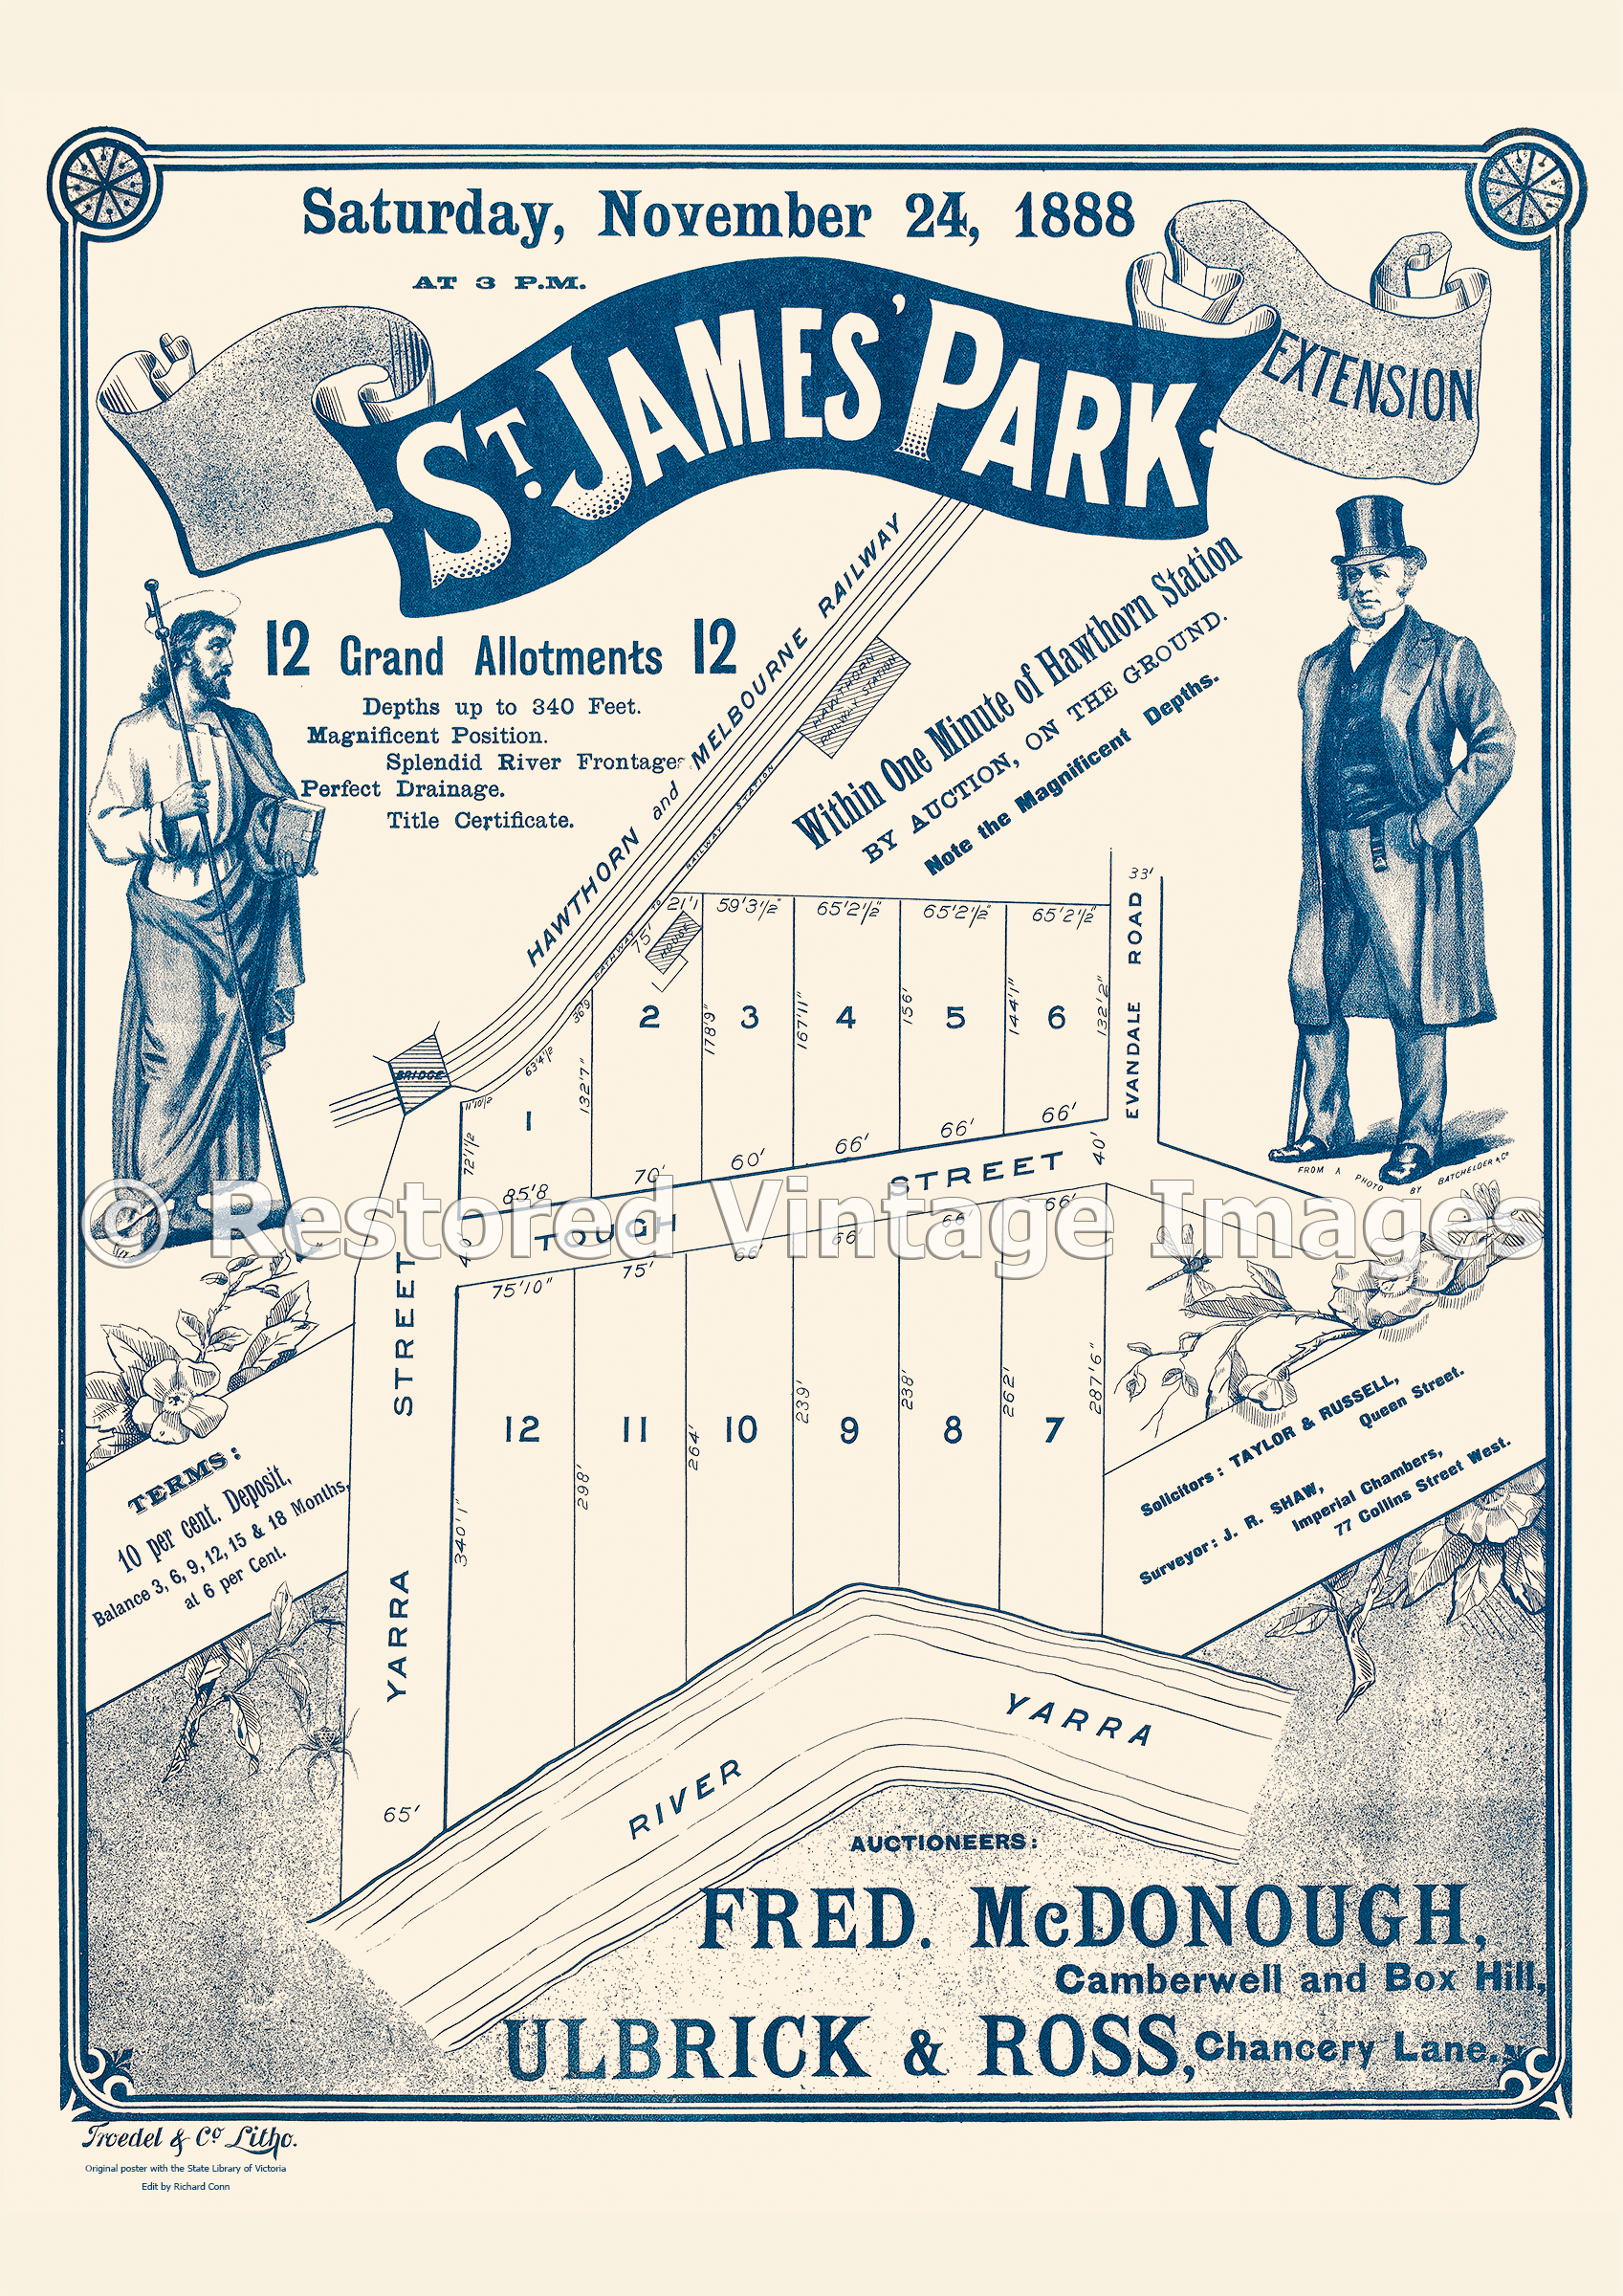 St. James’ Park Extension 24th November, 1888 – Hawthorn